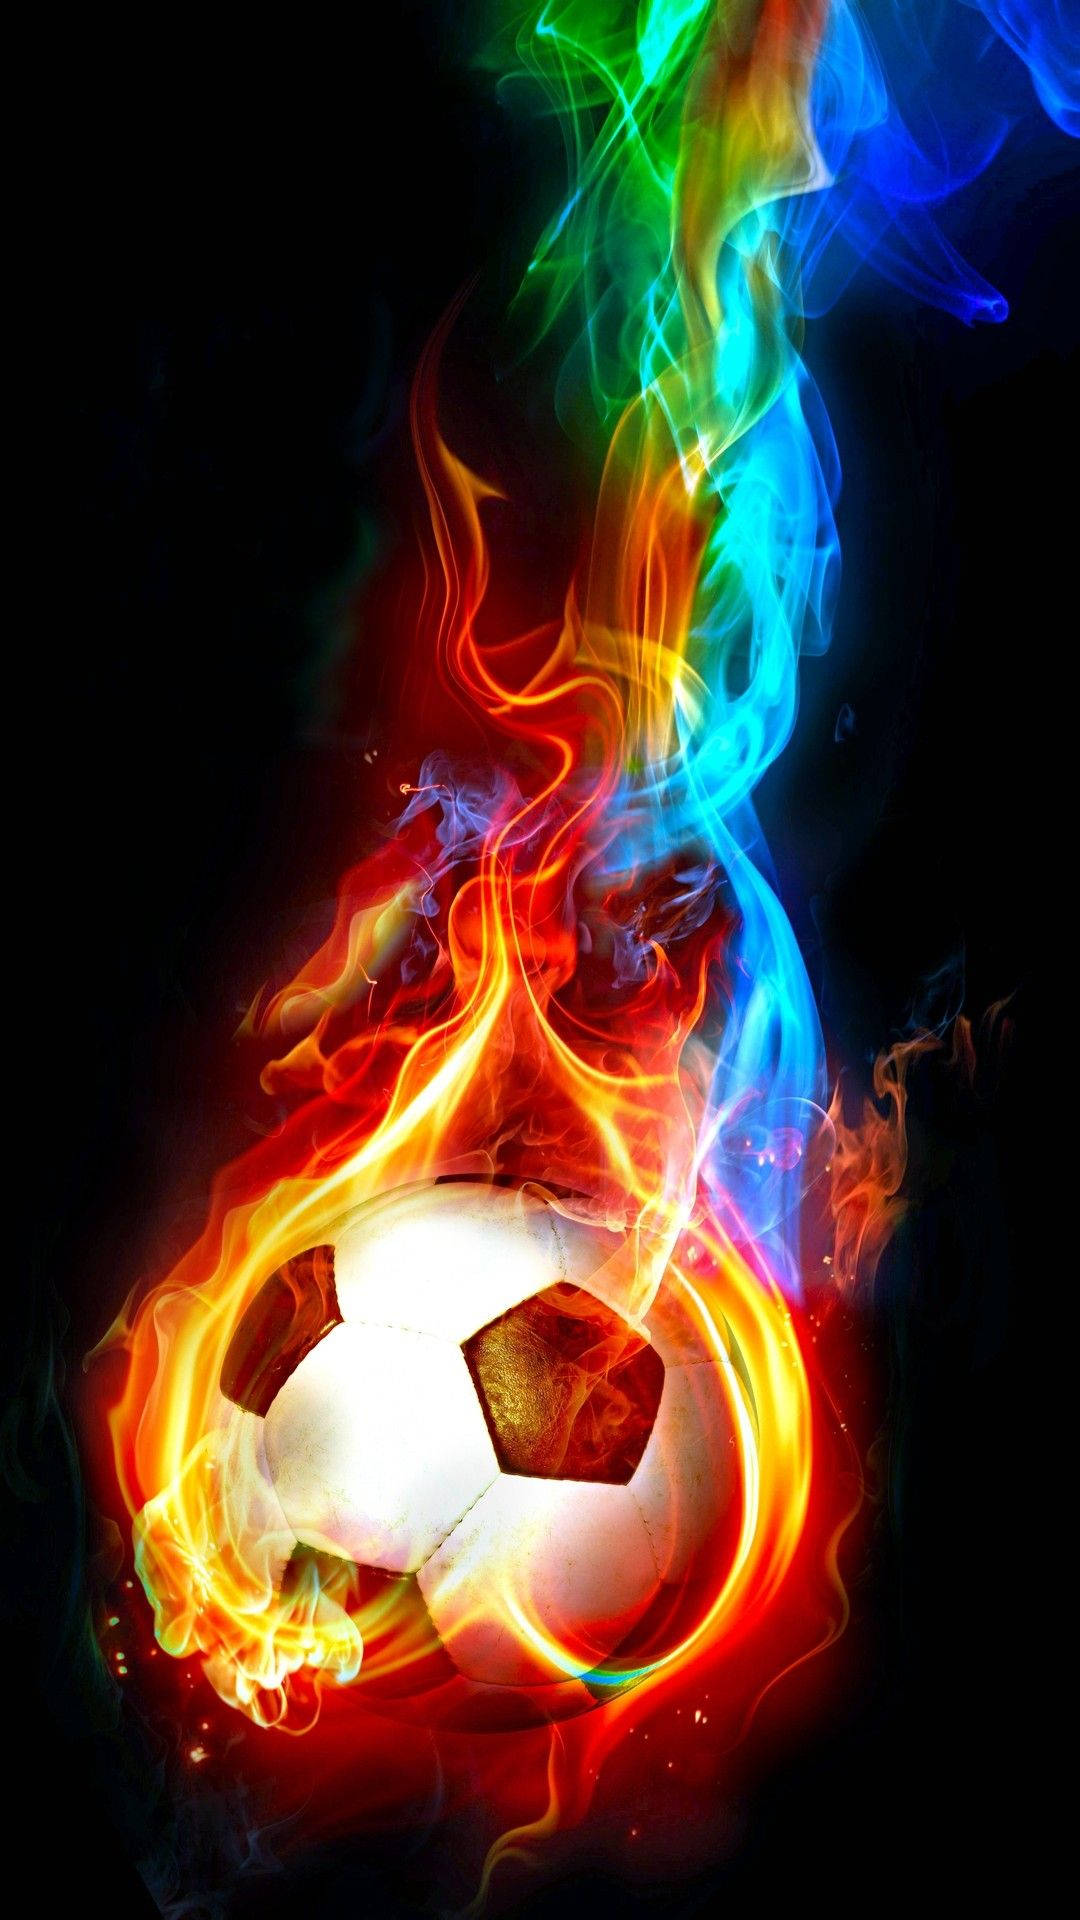 Cool Soccer Ball On Fire